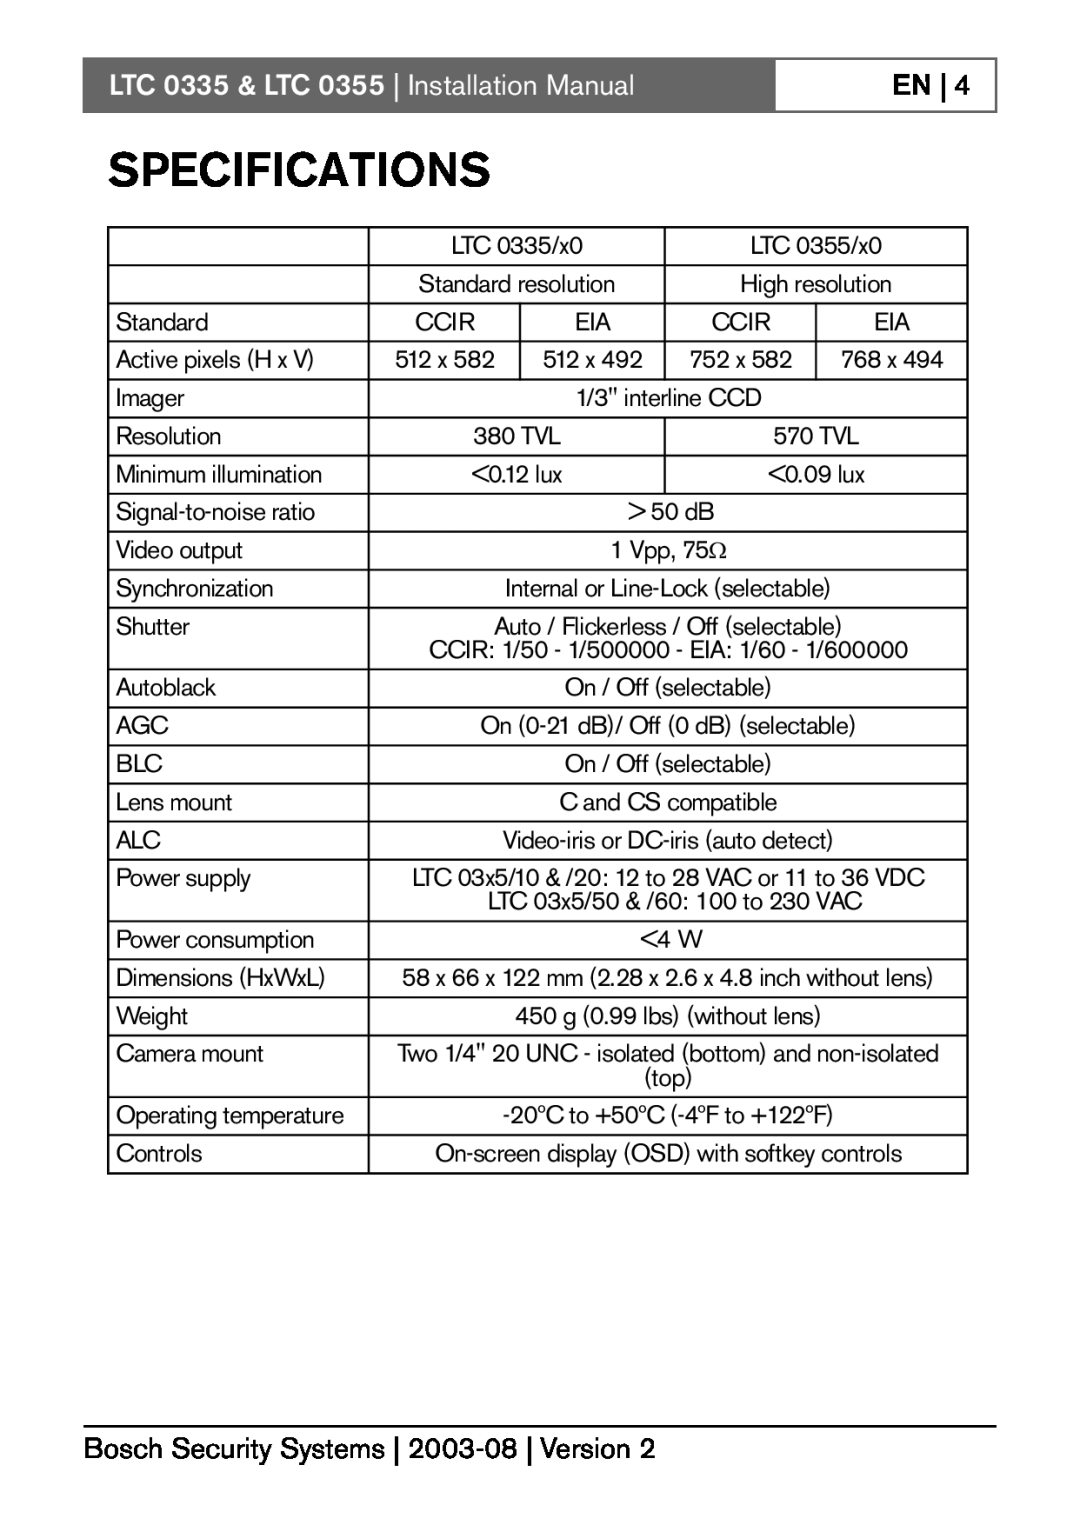 Bosch Appliances Specifications, LTC 0335 & LTC 0355 Installation Manual, En, Bosch Security Systems 2003-08 Version 